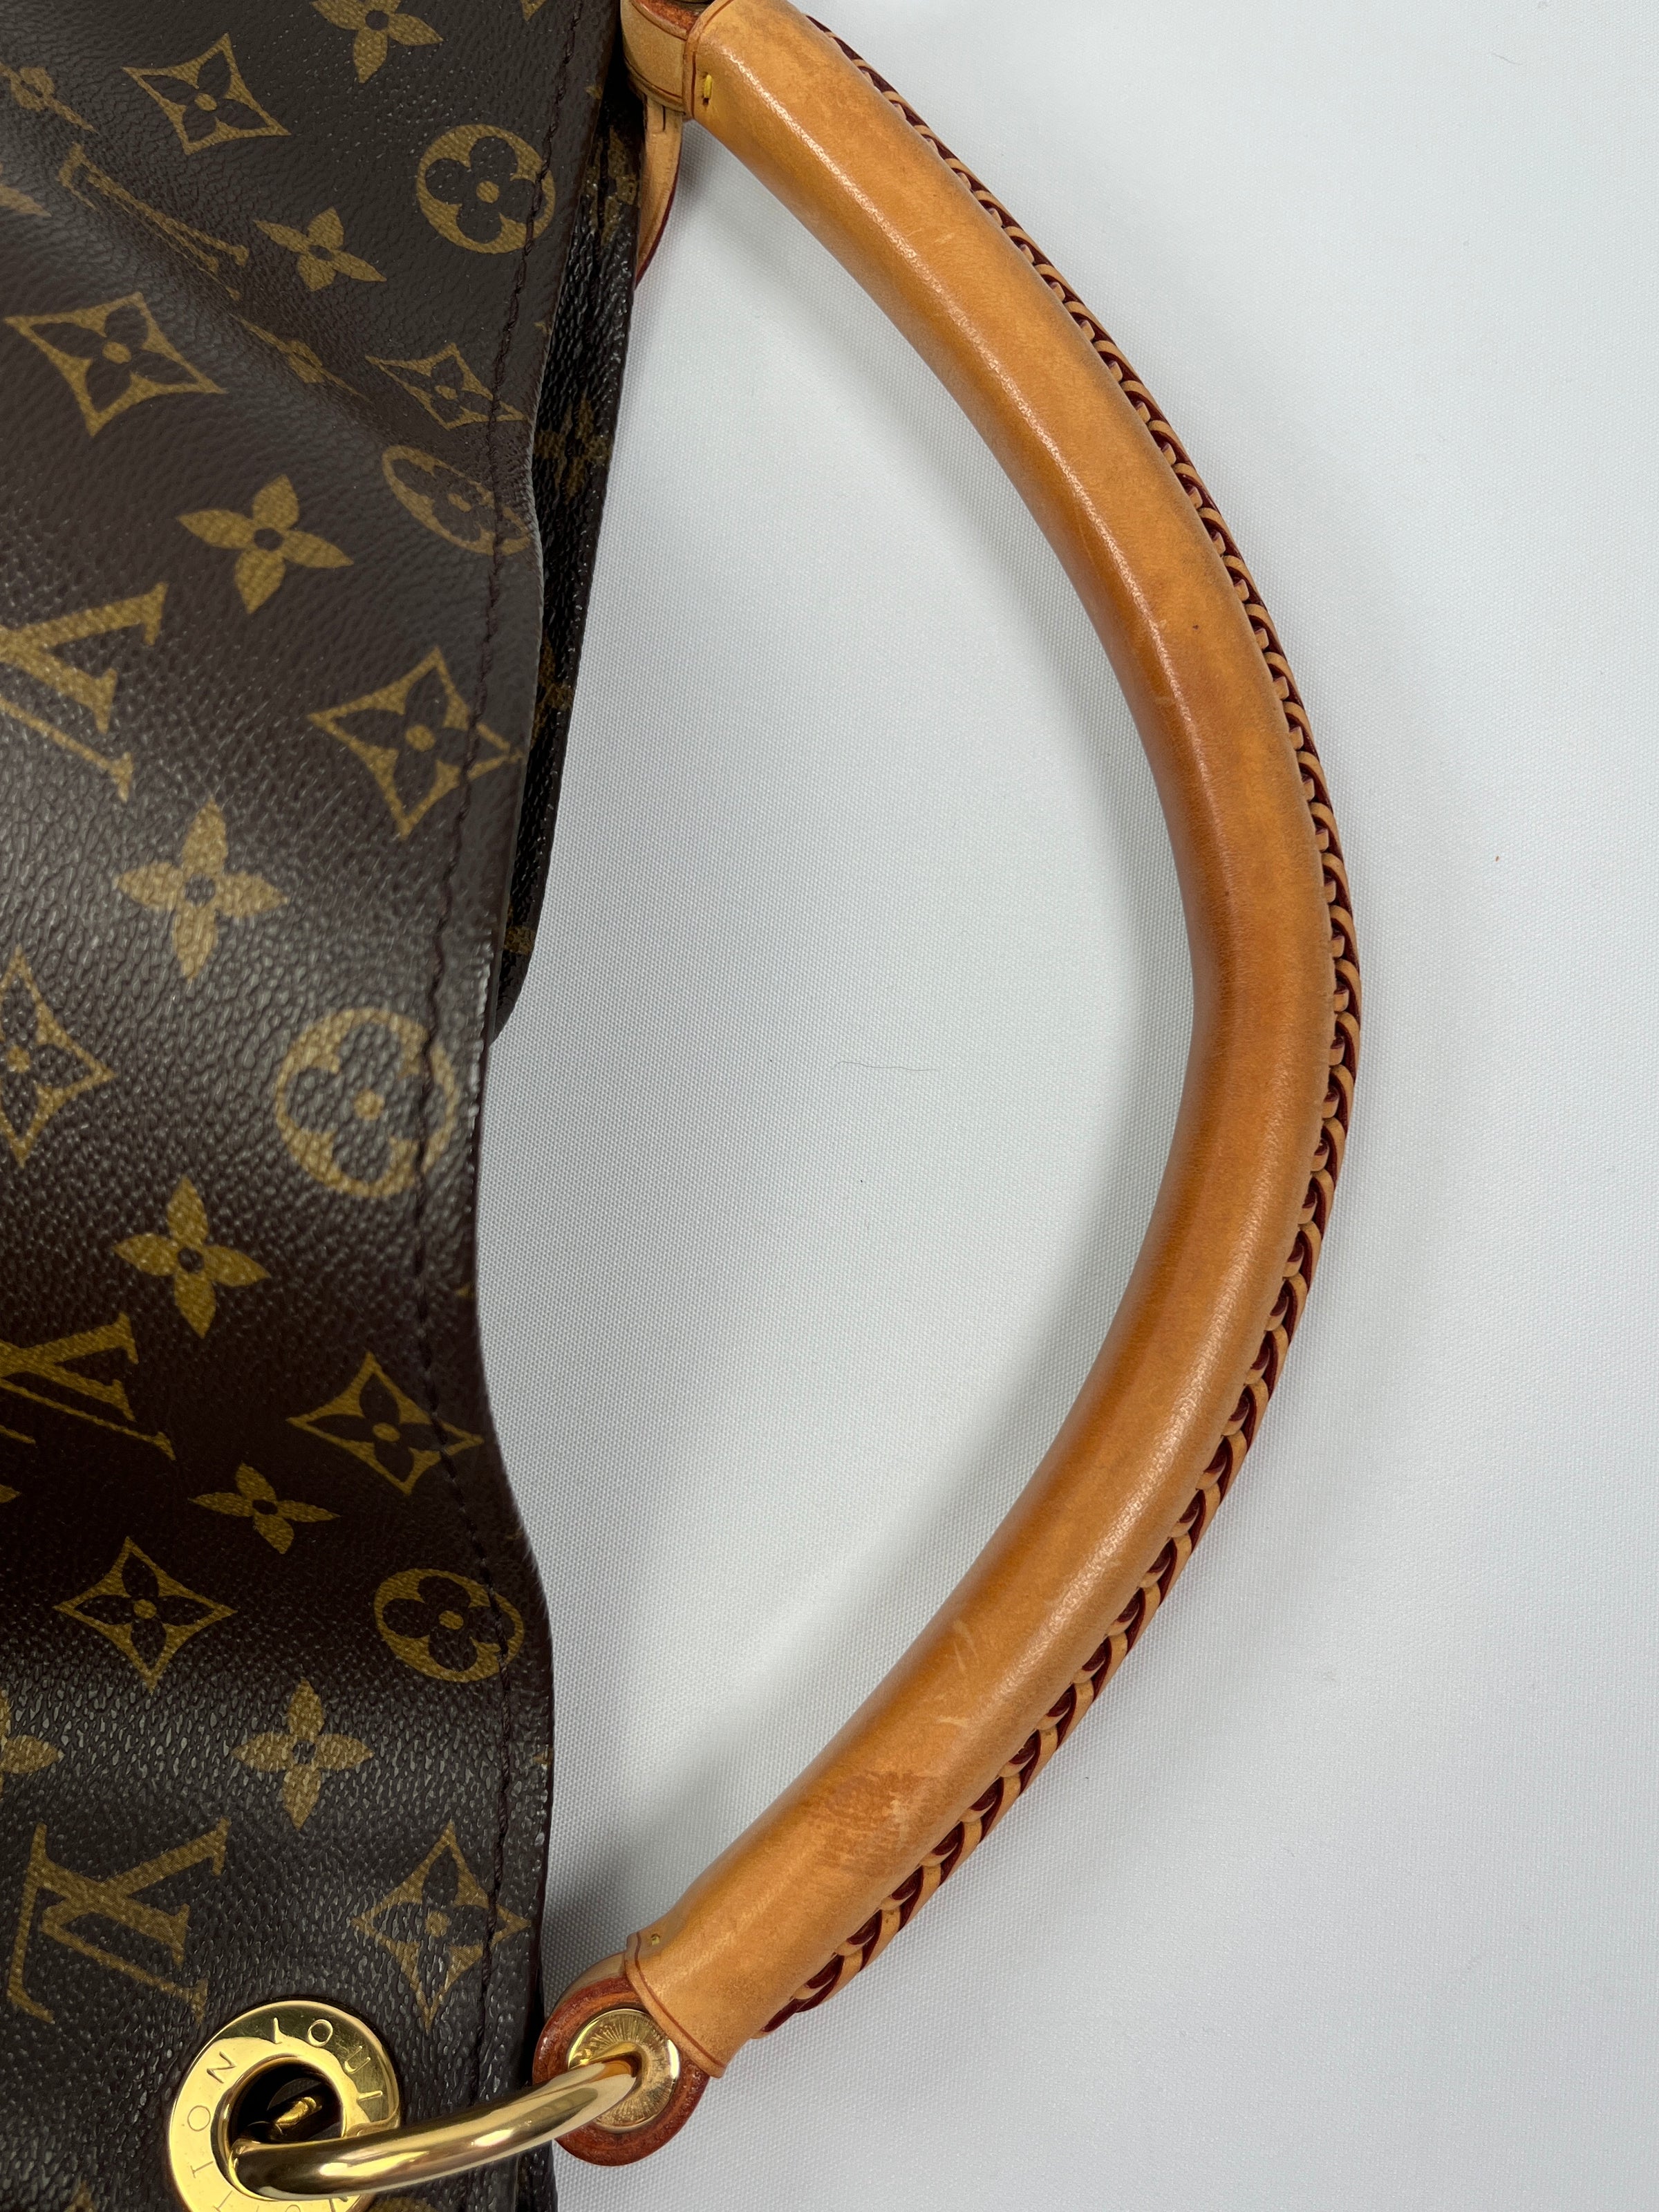 Handbag Shoulder Bag for Women  Louis Vuitton Monogram Artsy MM